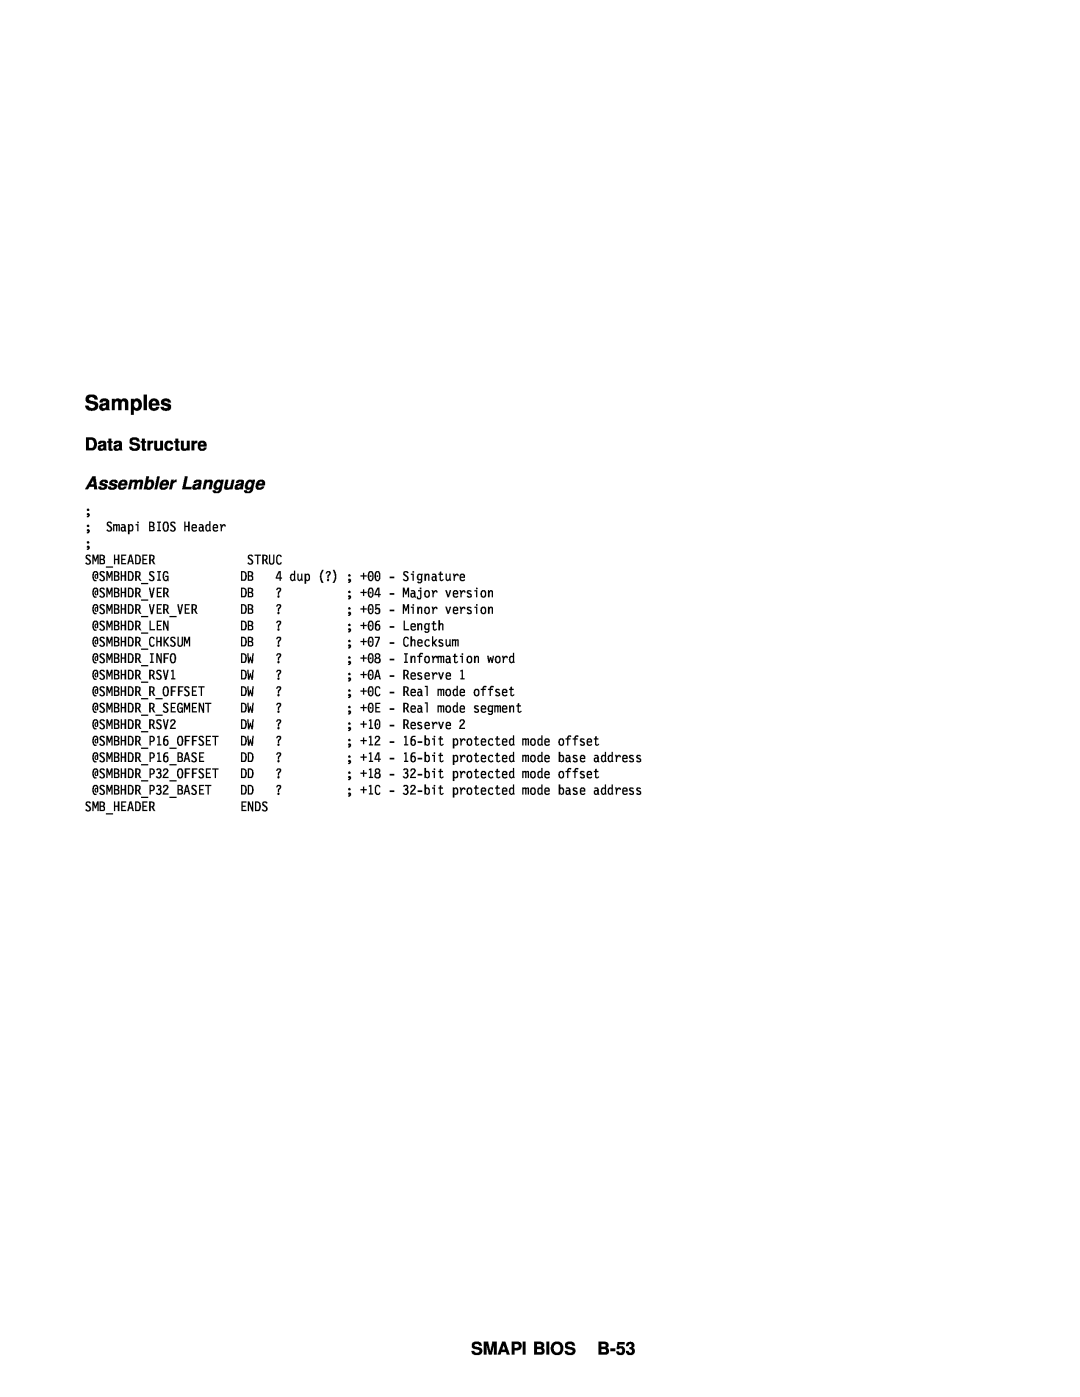 IBM 770 manual Samples, Data Structure, SMAPI BIOS B-53 